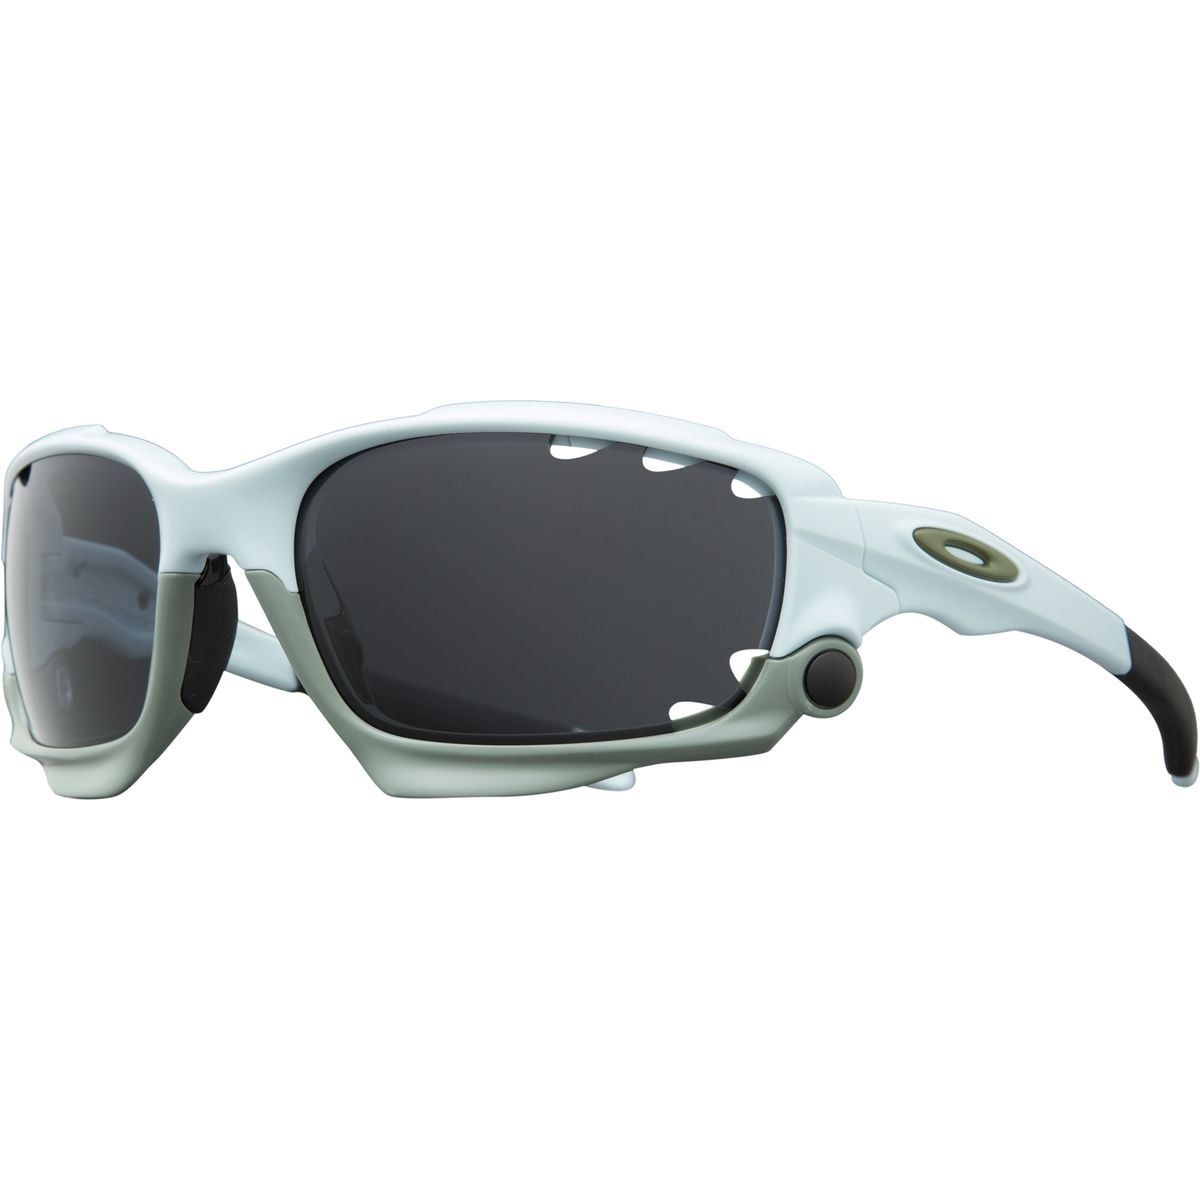 Oakley Racing Sunglasses Accessories